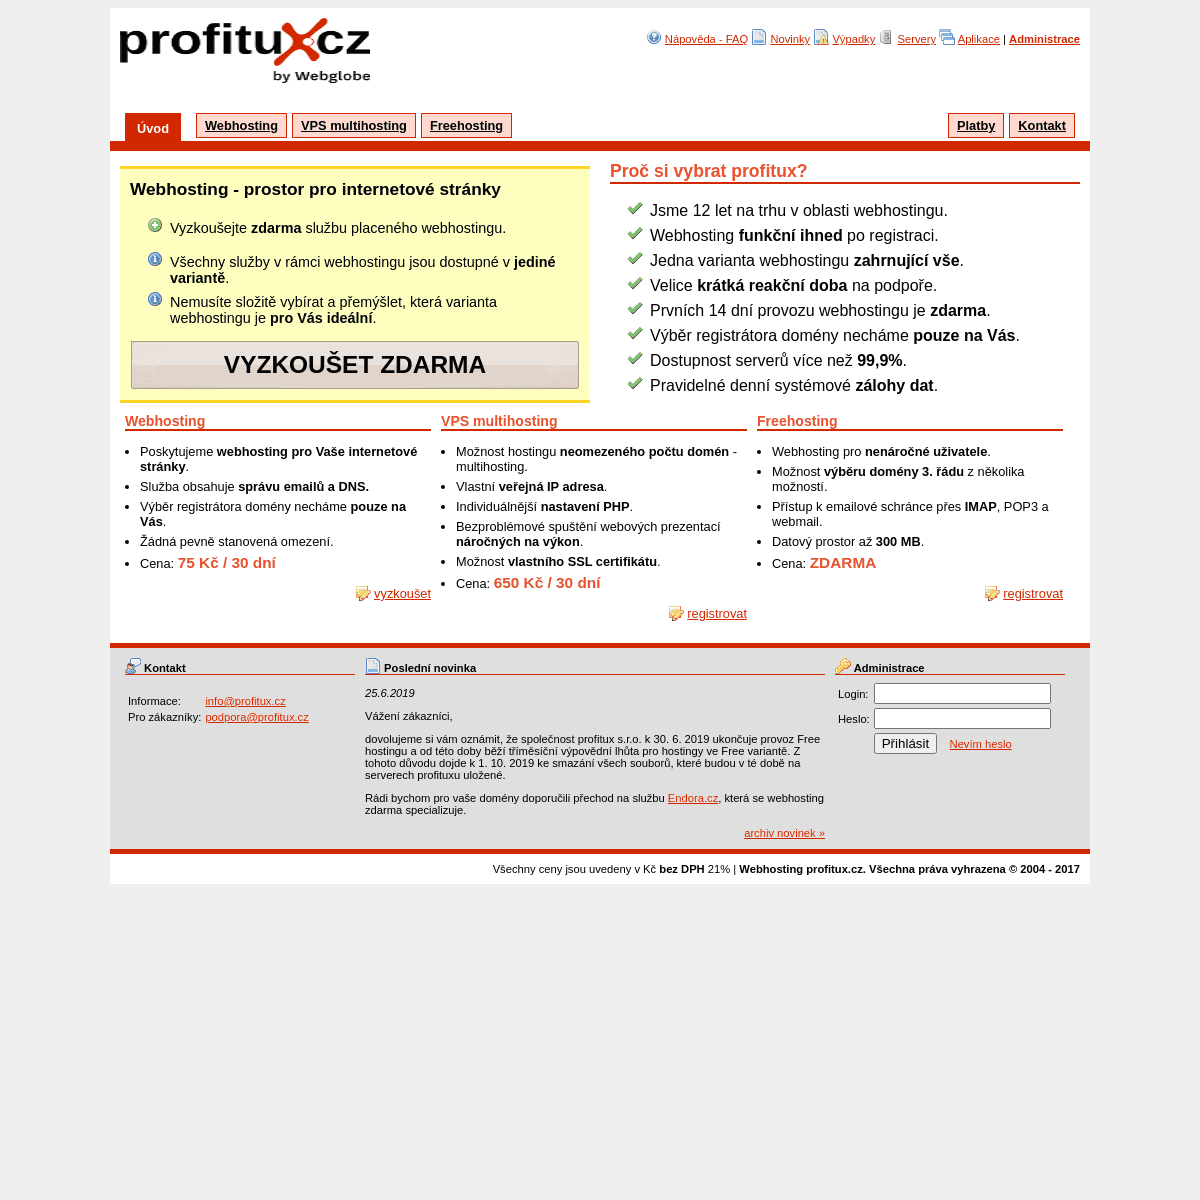 A complete backup of https://profitux.cz